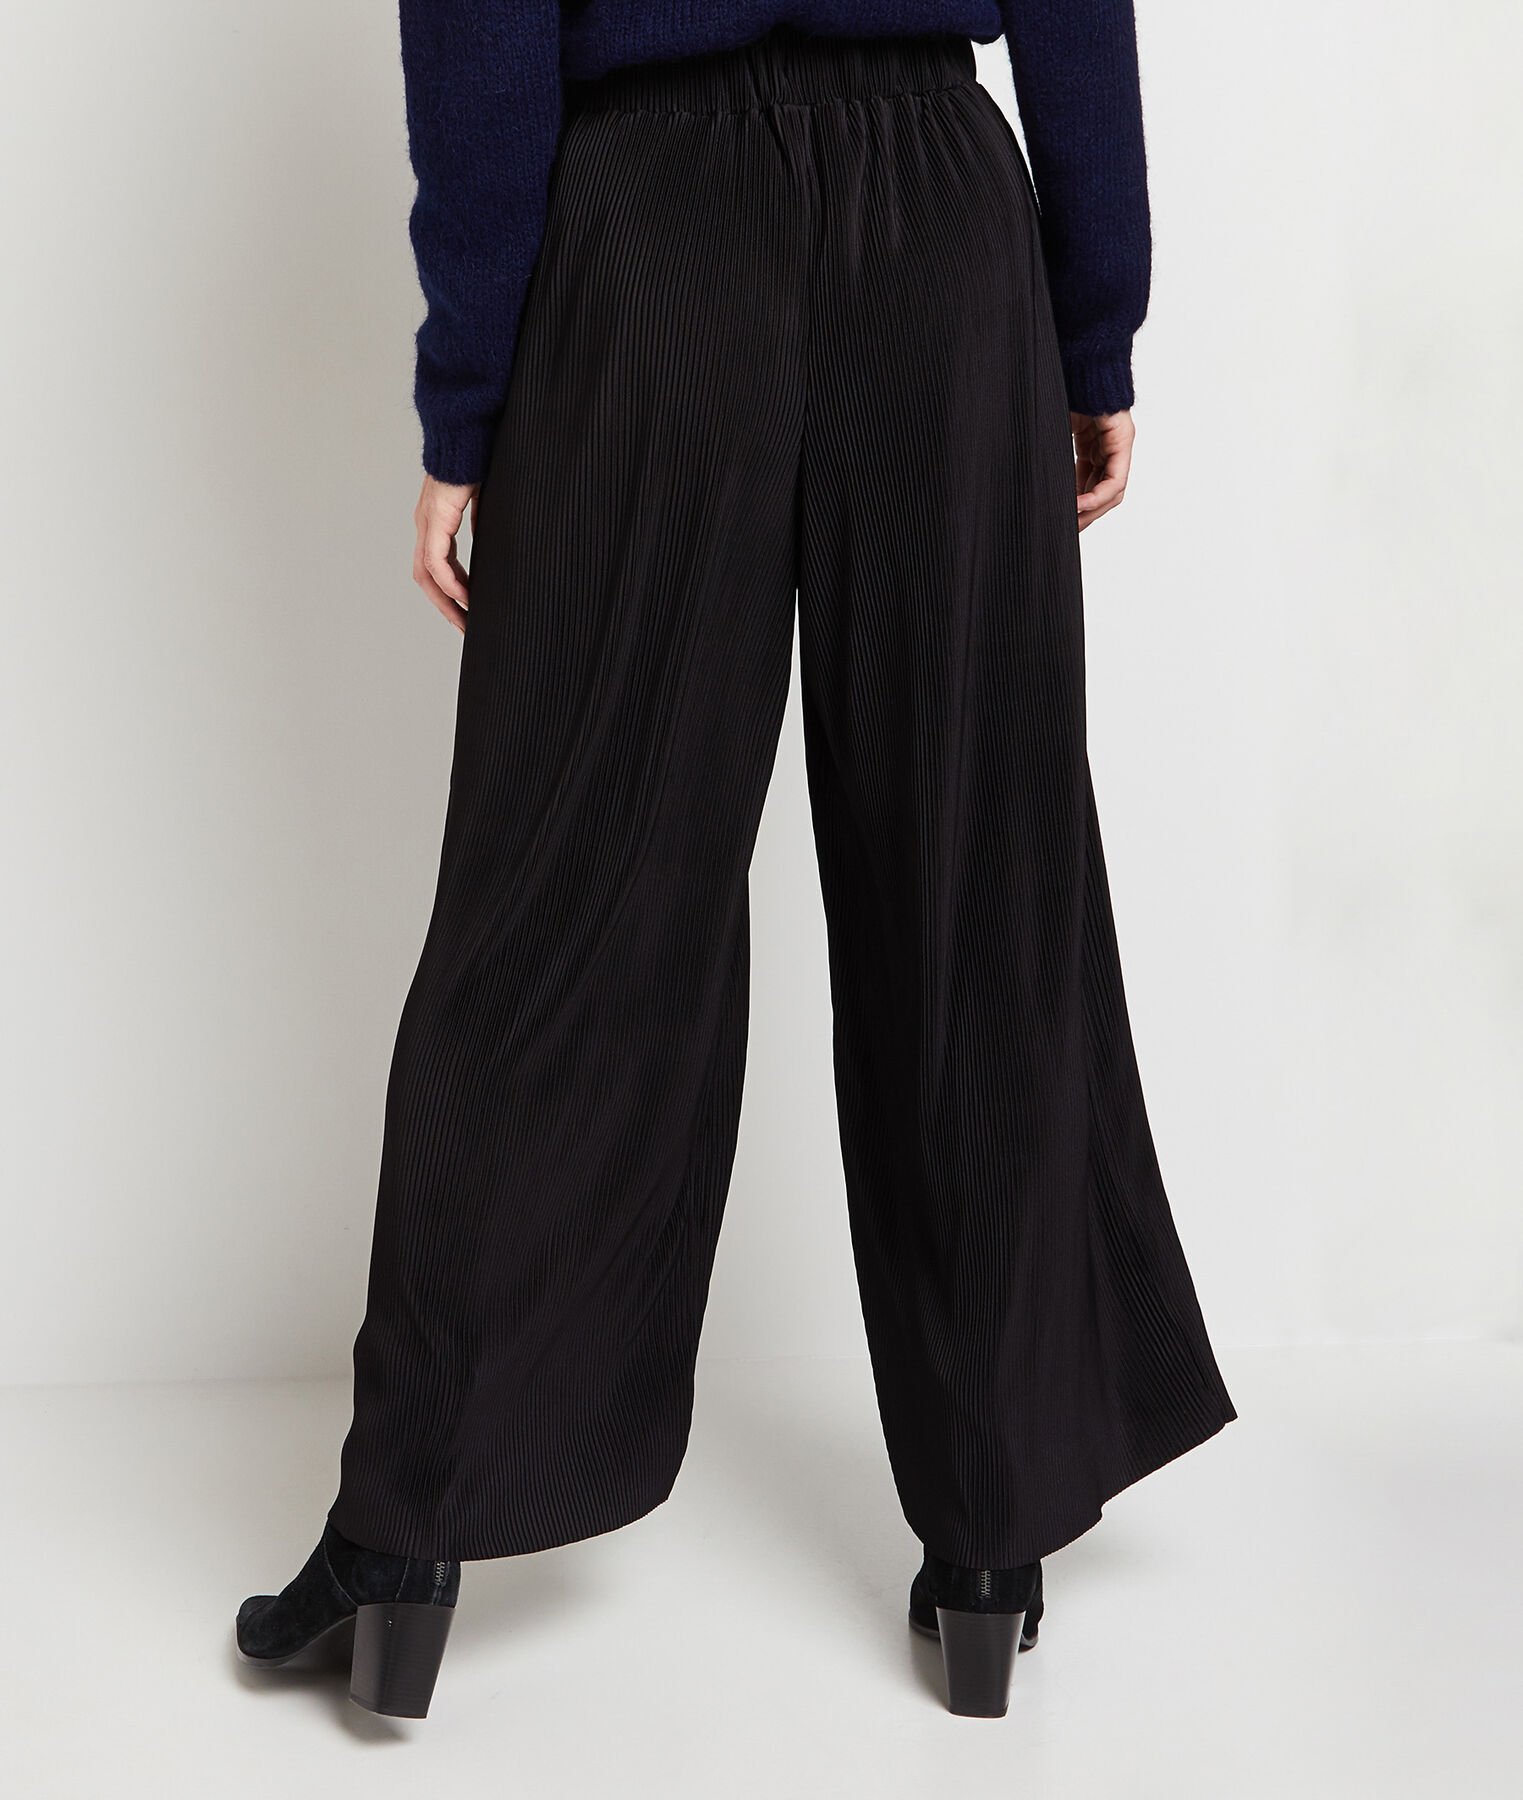 Pantalon large plissé femme